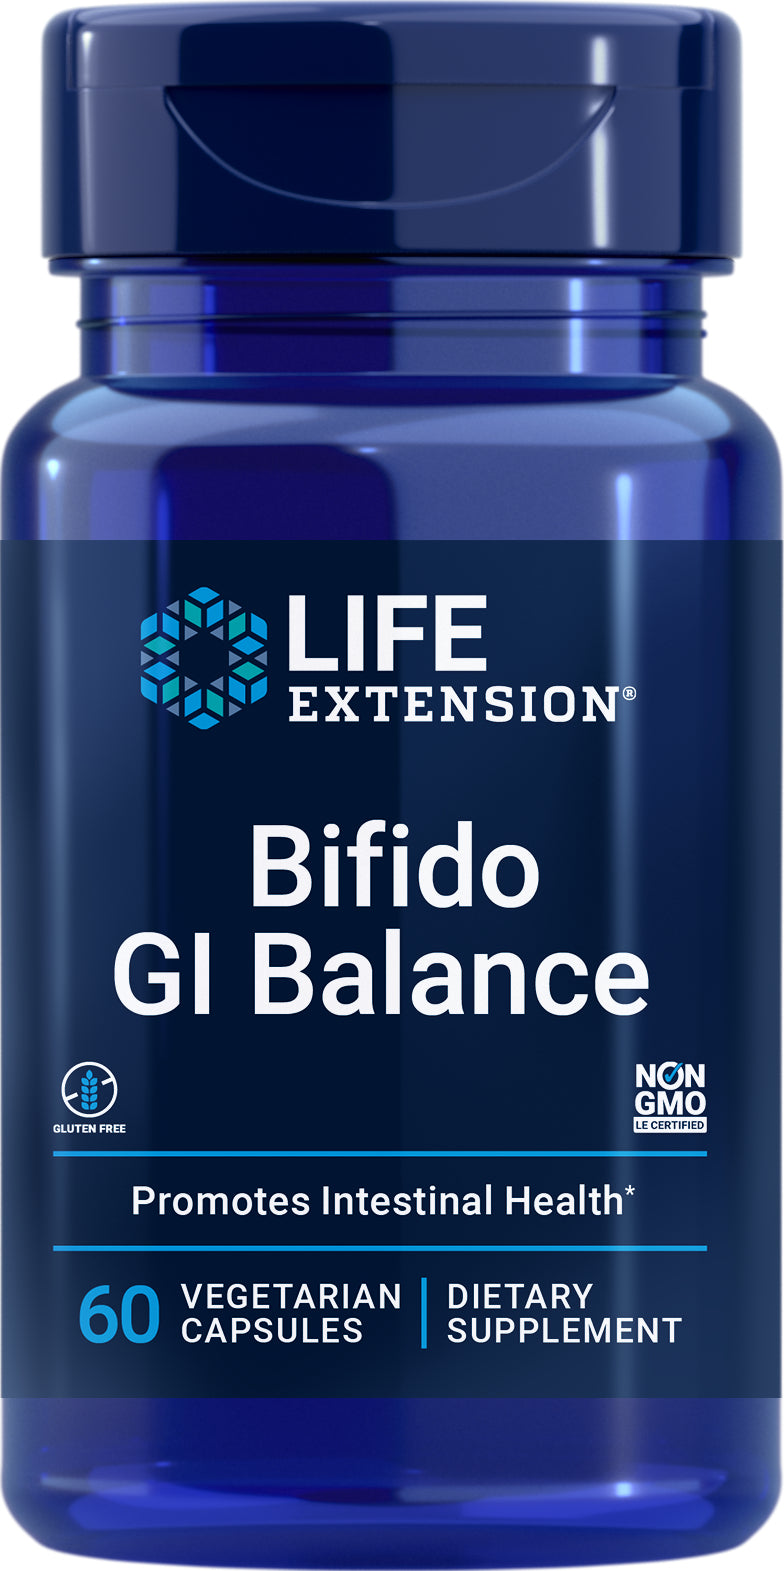 Bifido GI Balance 60 veg caps by Life Extension